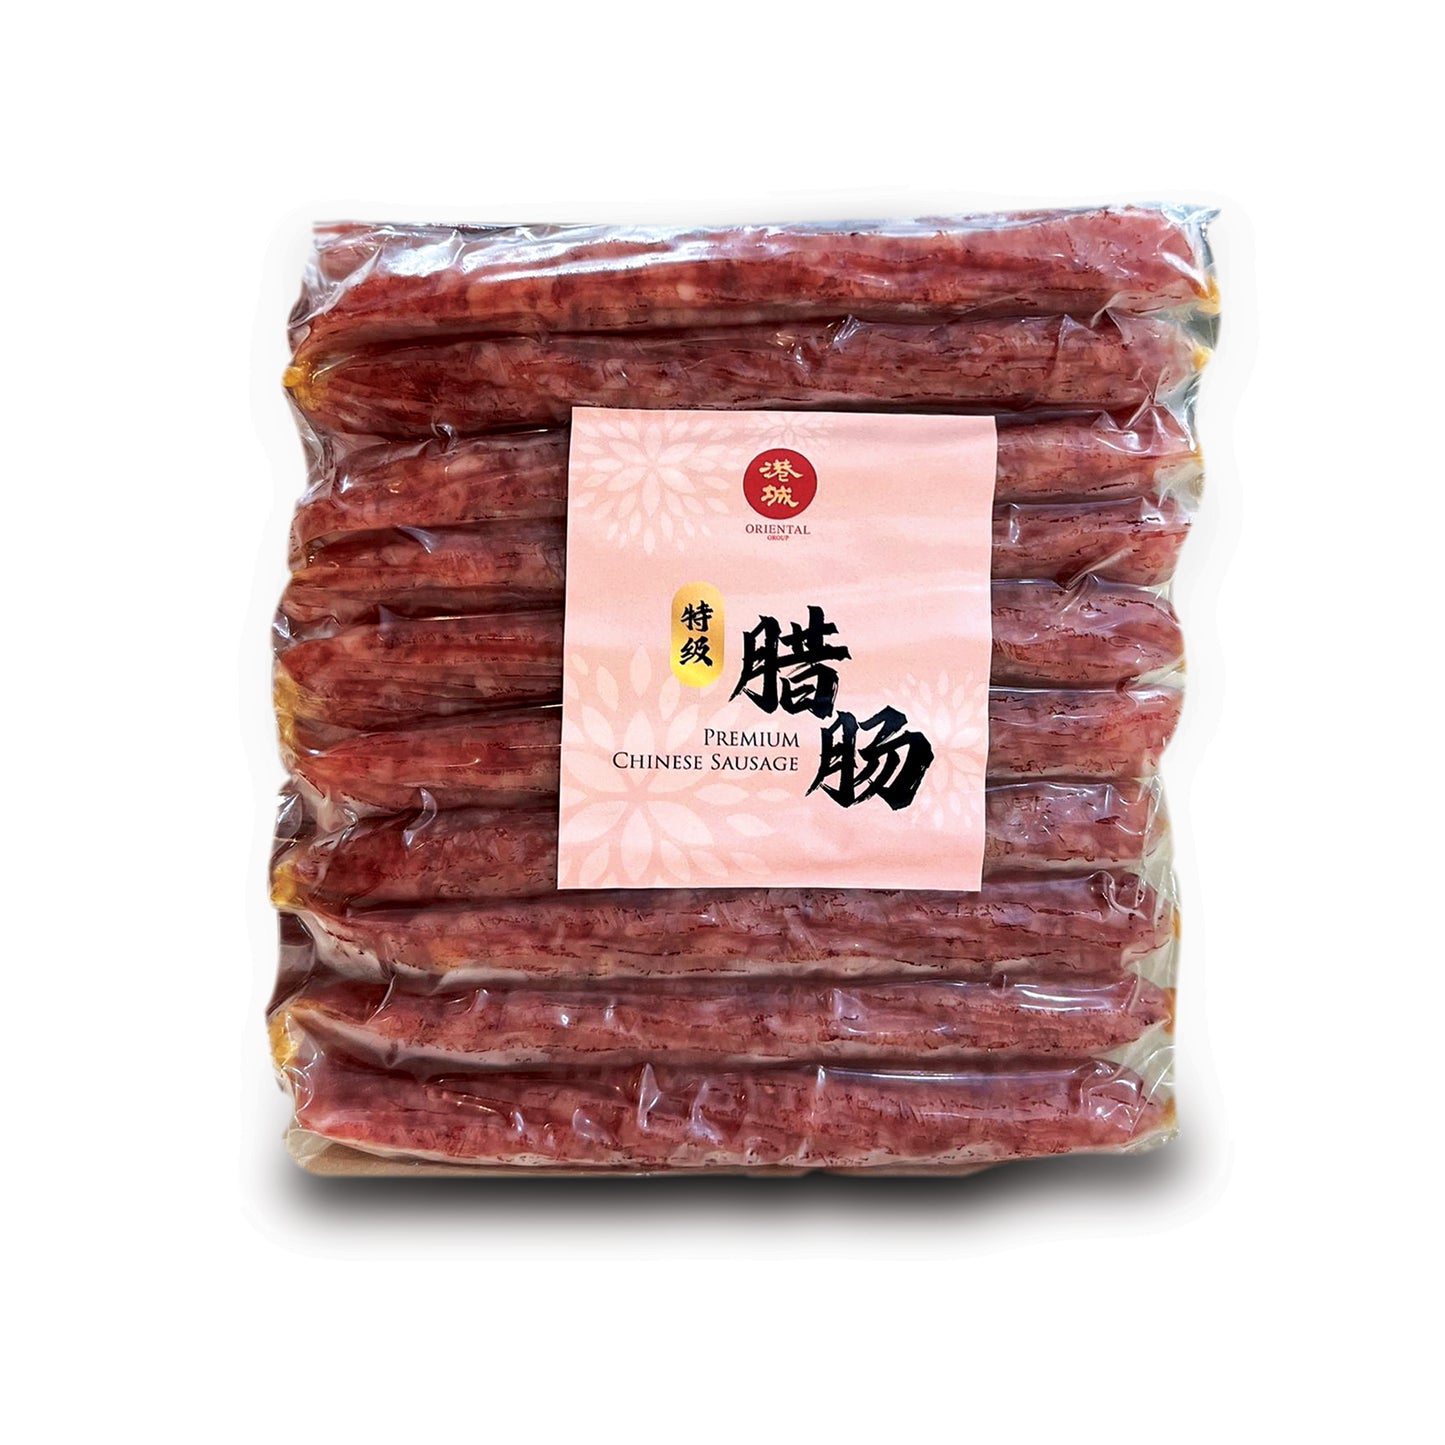 (Non Halal) - 特级腊肠 Premium Chinese Sausage (5 pairs)